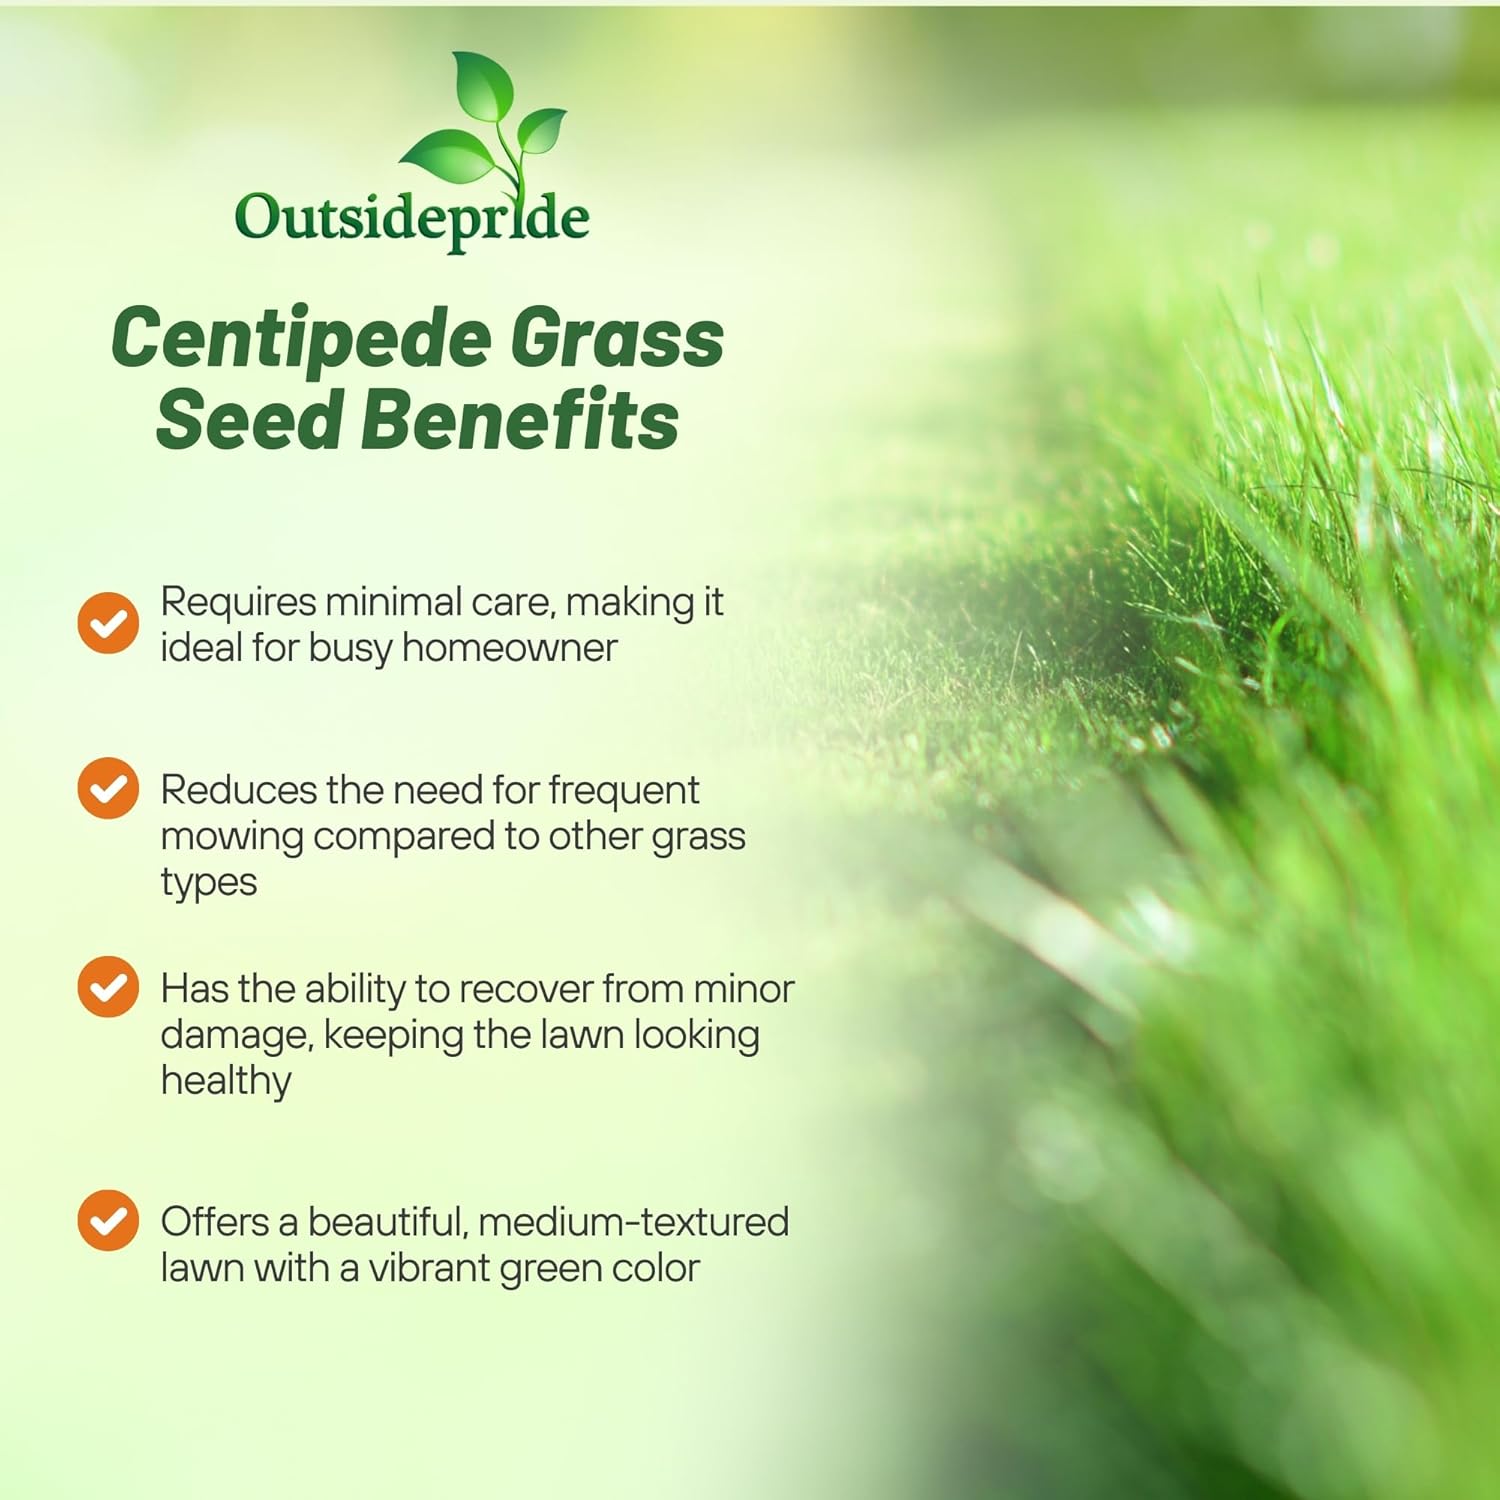 Centipede Grass Seed Benefits